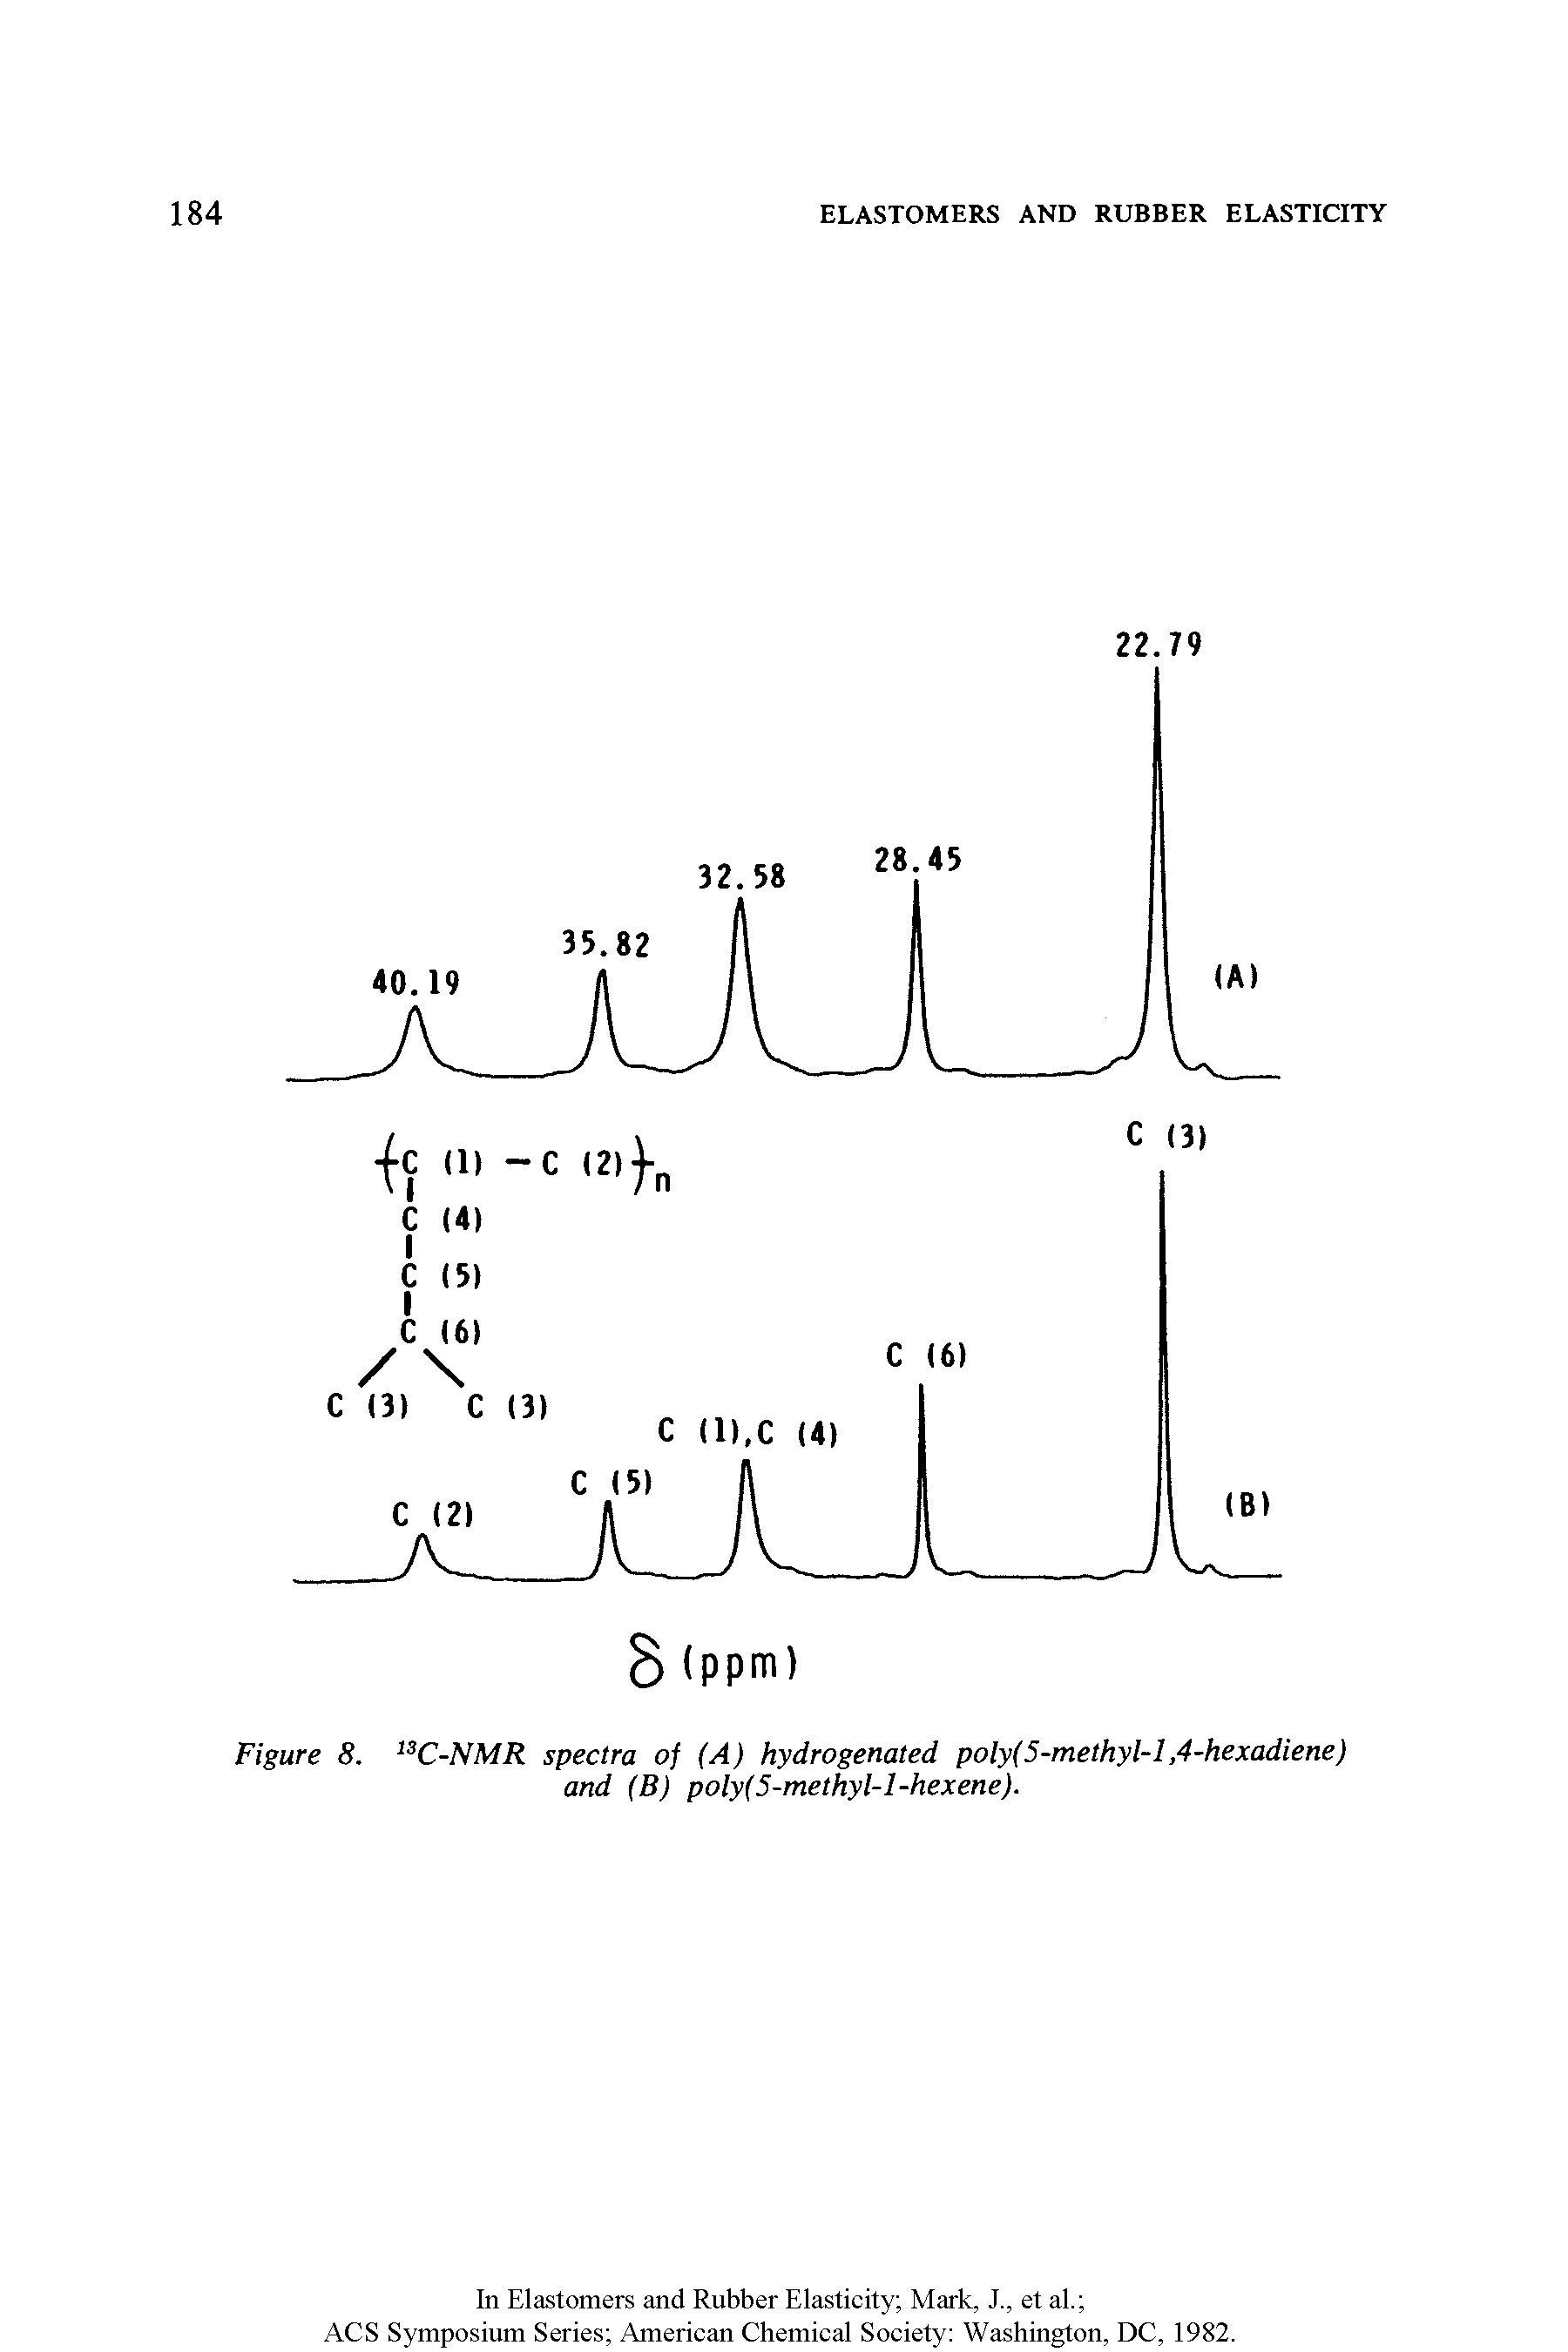 Figure 8. 13C-NMR spectra of (A) hydrogenated poly(5-methyl-l,4-hexadiene) and (B) poly(5-methyl-l-hexene).